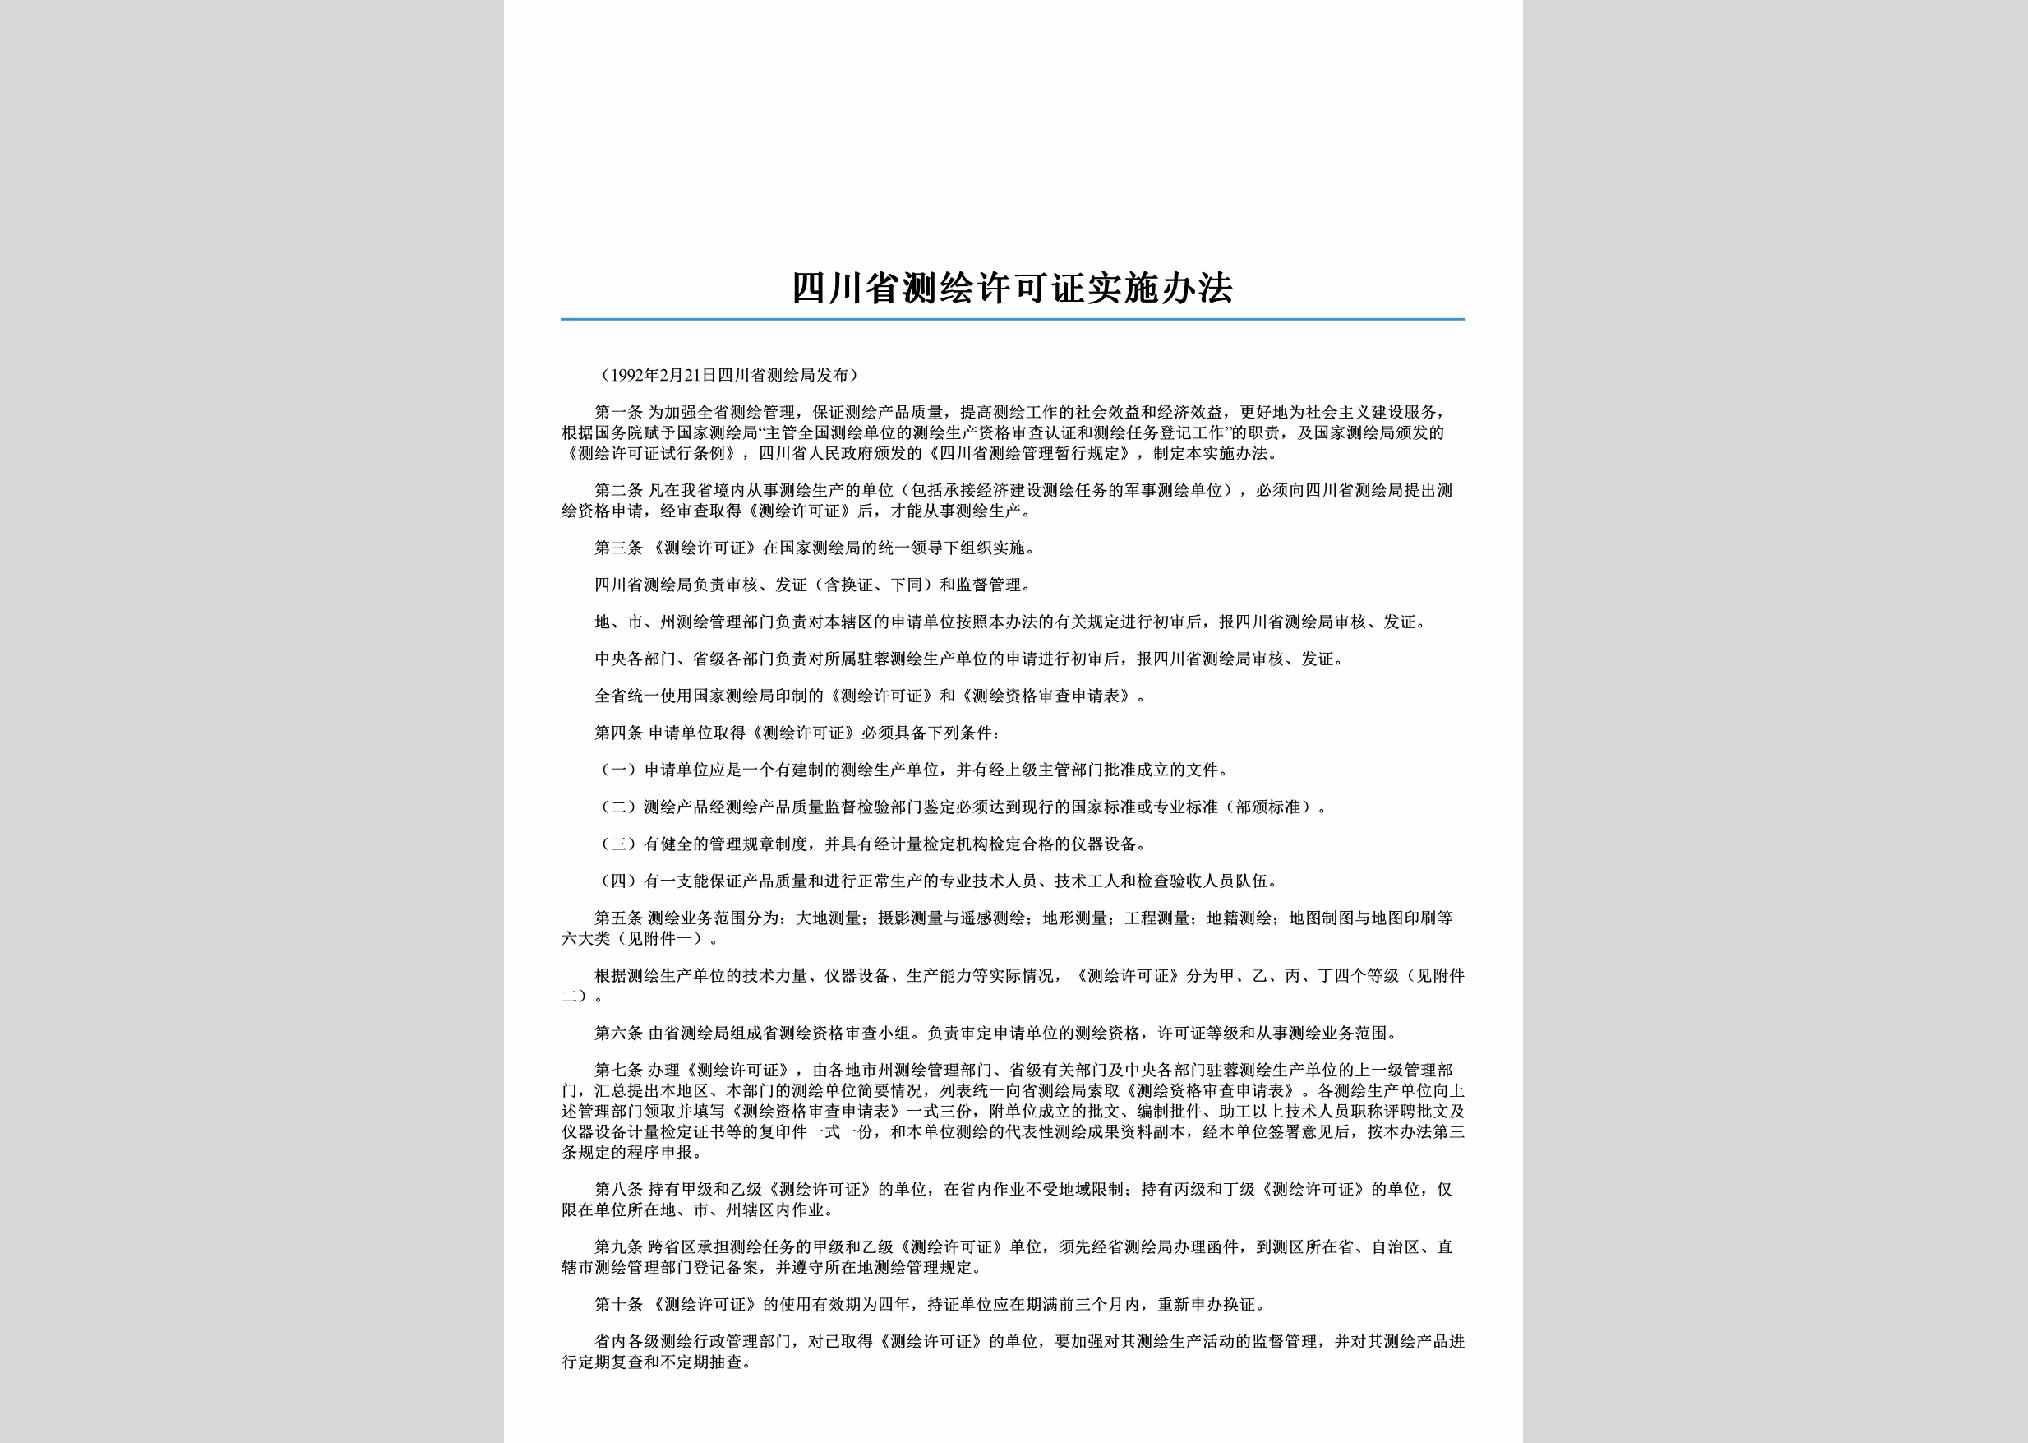 SC-CHZKZBF-2006：四川省测绘许可证实施办法